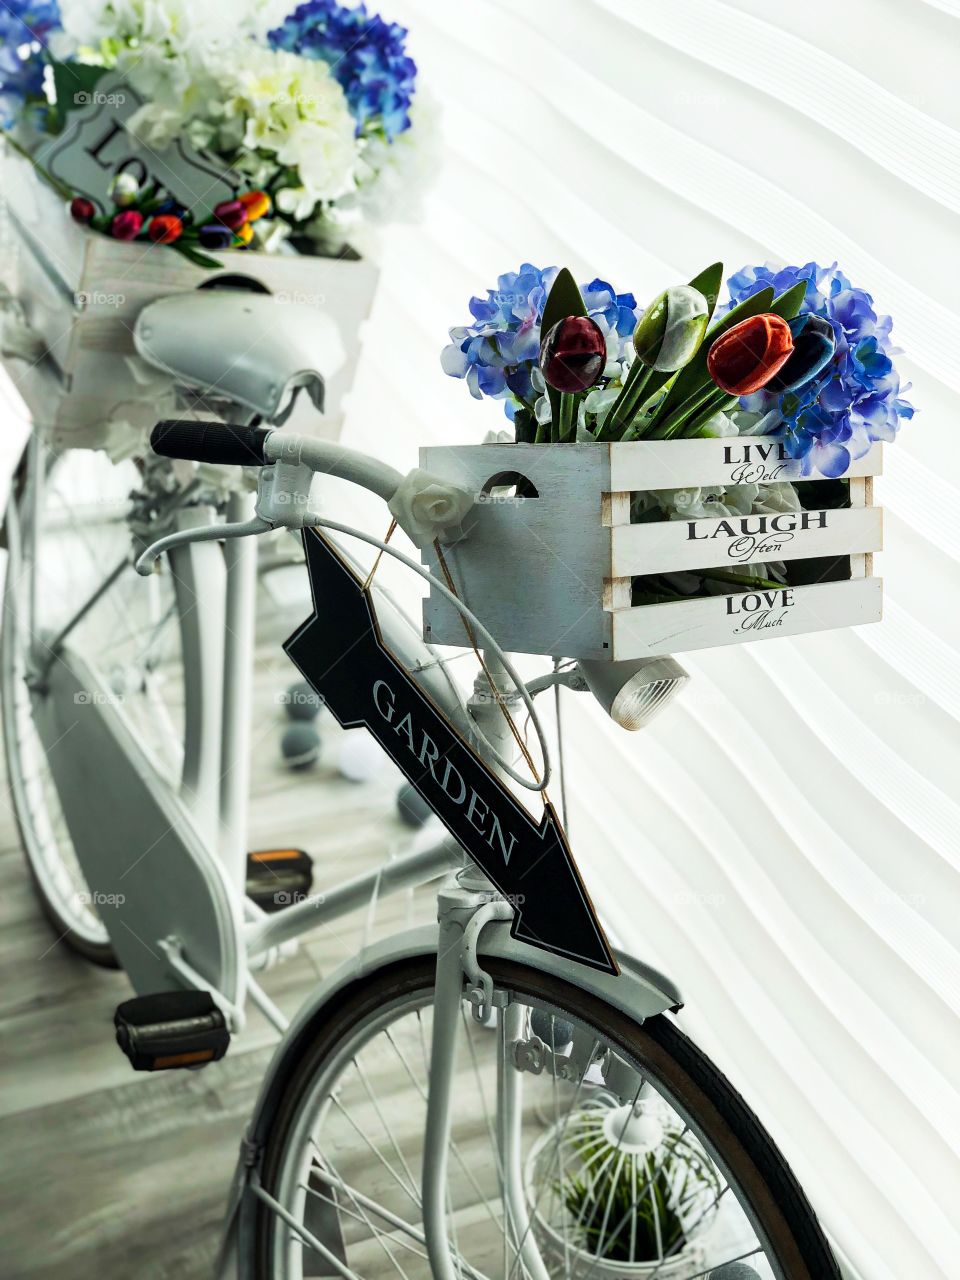 Bike with flowers